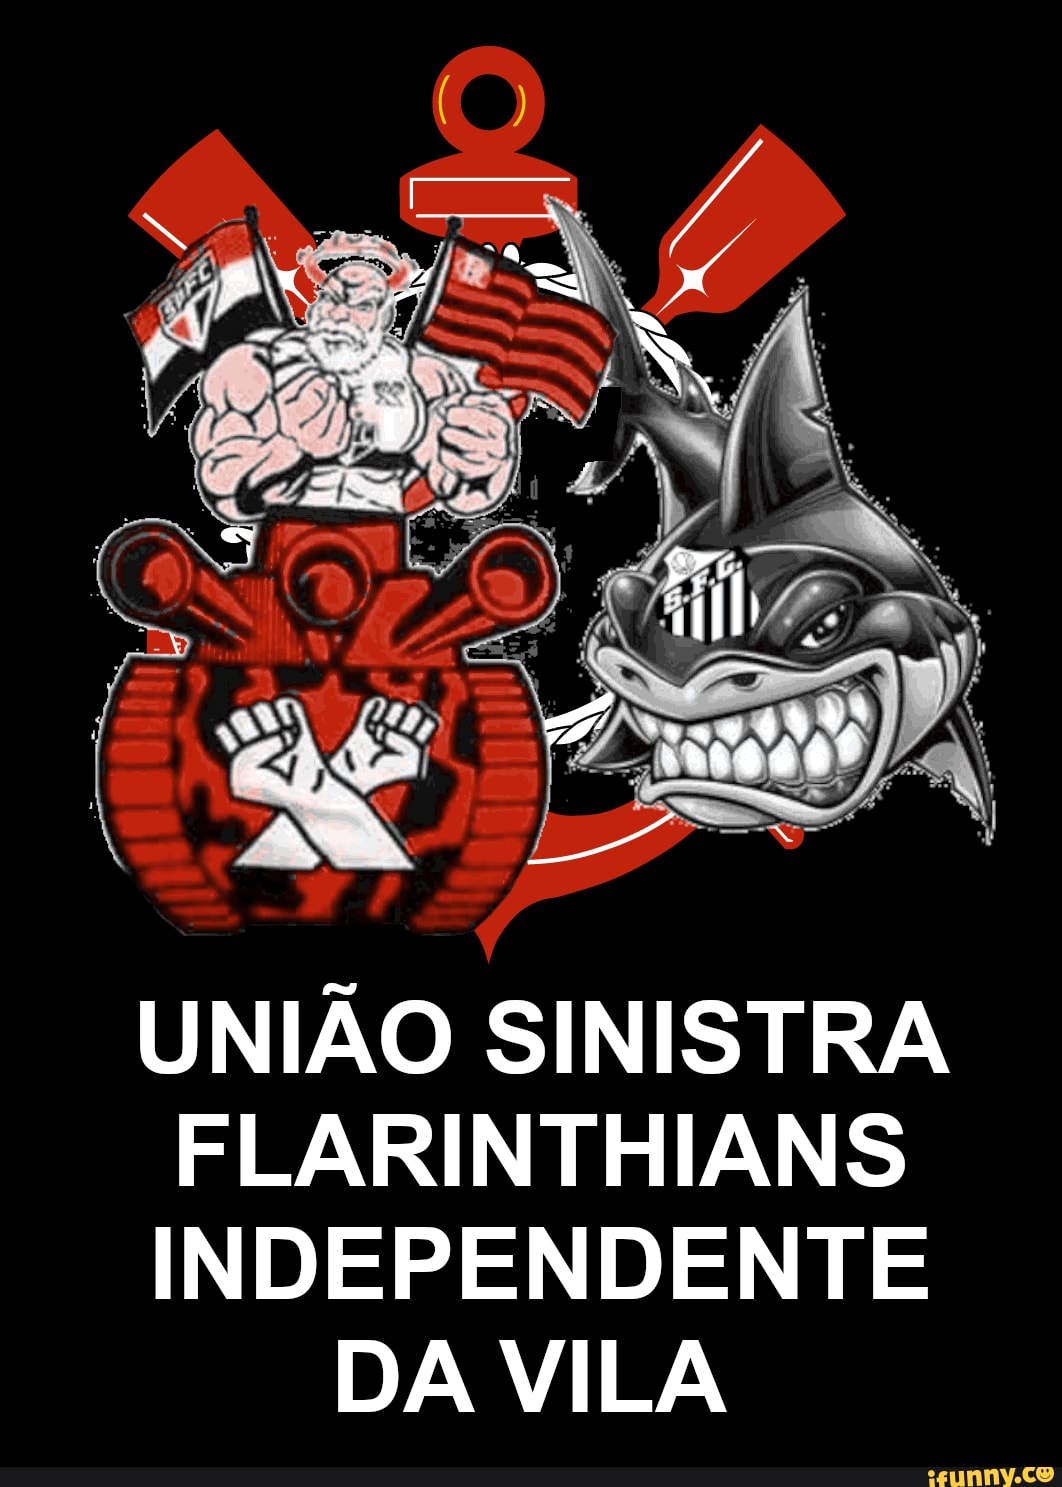 união Flarinthians dnv? #flamengo #corinthians #flarinthians #memesbra